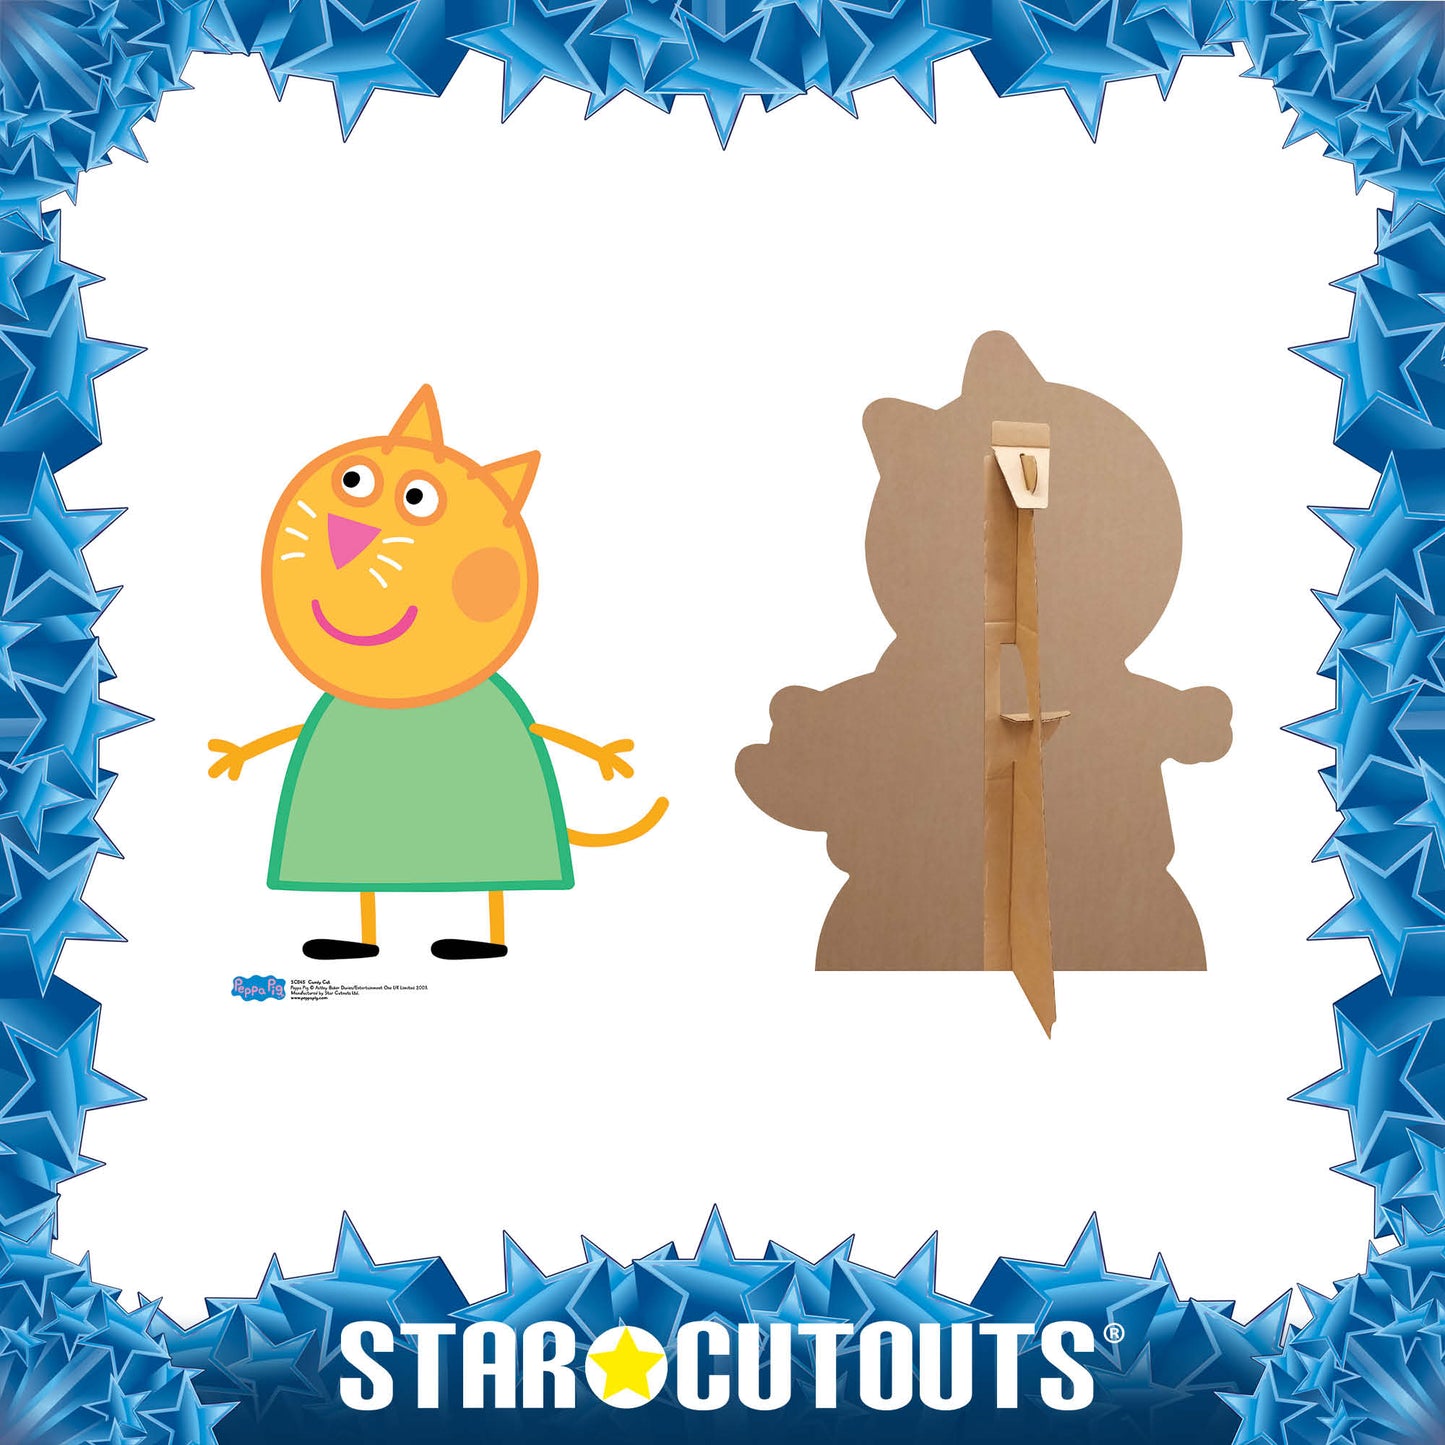 Candy Cat Star Mini Cutout Cardboard Cutout